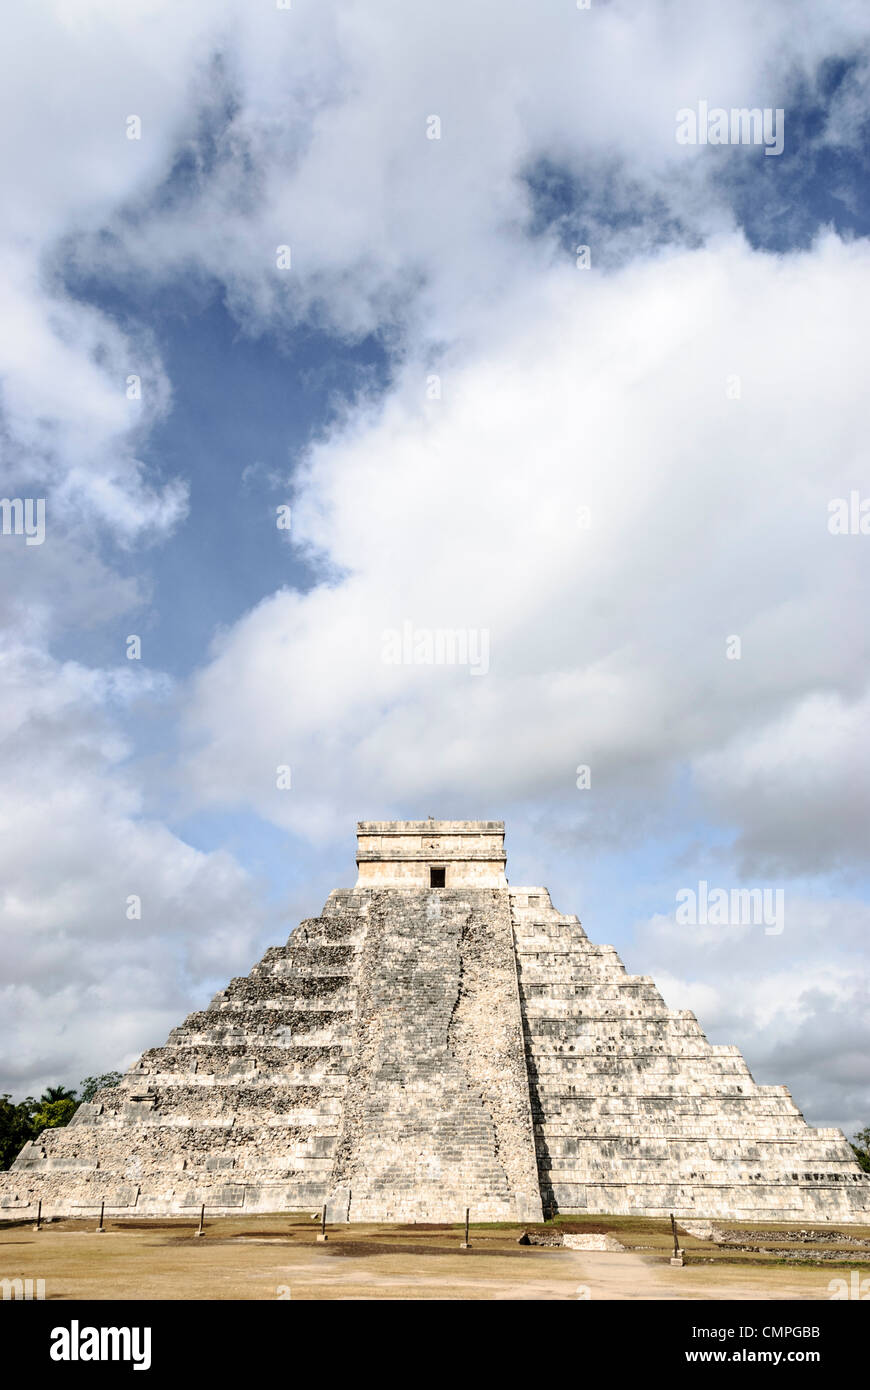 CHICHEN ITZA, Mexico - The pyramid of the Temple of Kukulkan (El Castillo) at Chichen Itza Archeological Zone, ruins of a major Maya civilization city in the heart of Mexico's Yucatan Peninsula. Stock Photo